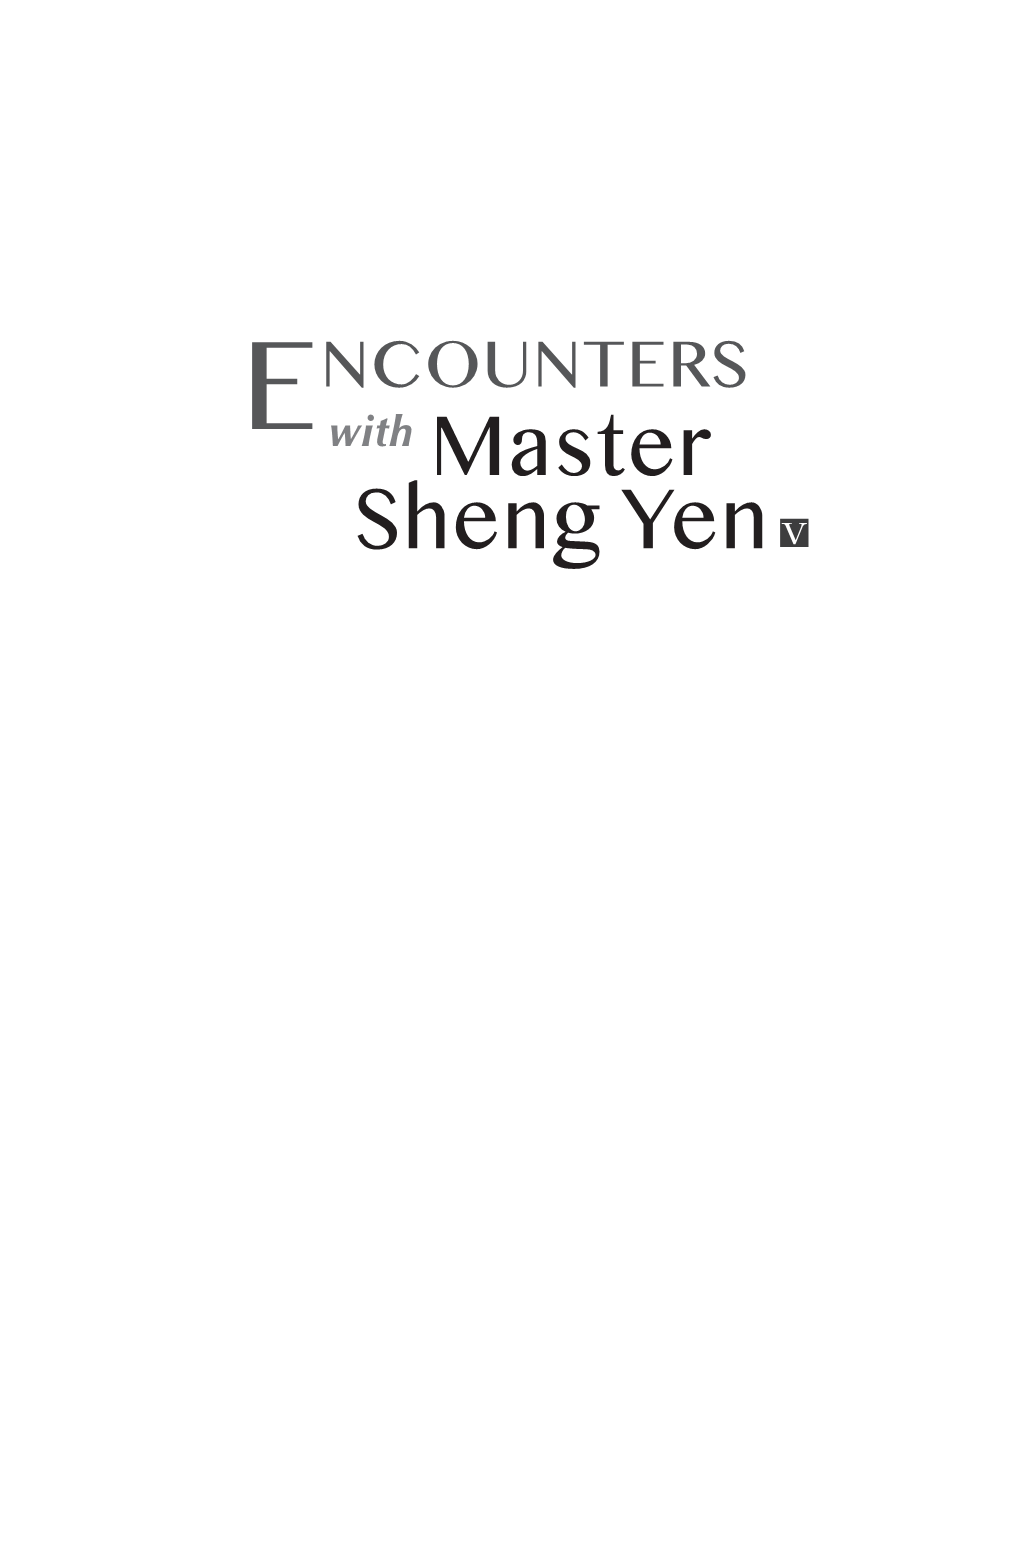 Master Sheng Yen Encounters with Master Sheng Yenⅴ Pocket Guides to Buddhist Wisdom E-21